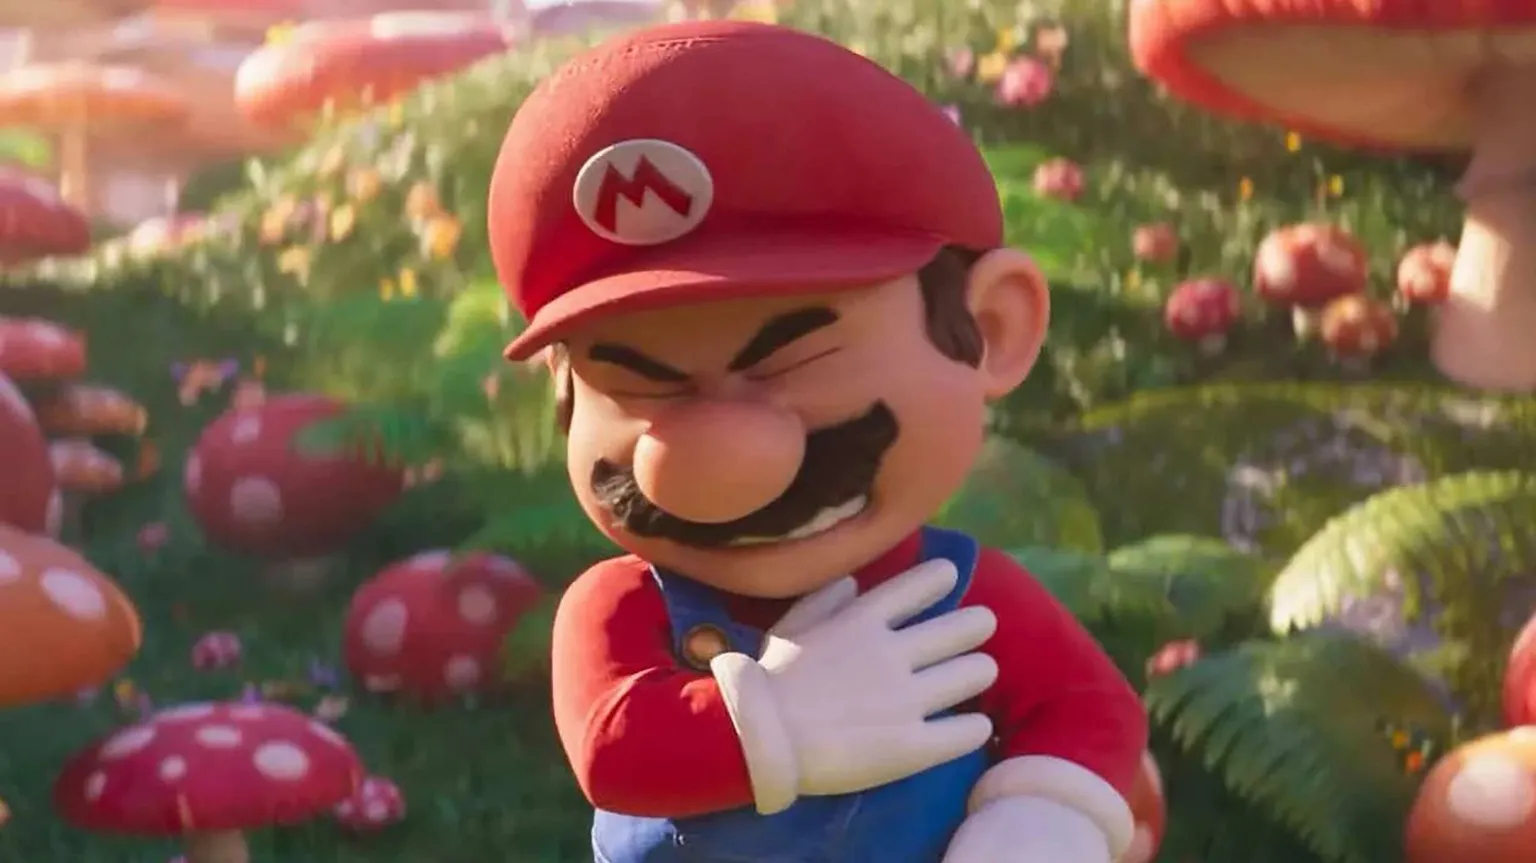 A still image from The Super Mario Bros. Movie. Image: Universal/Illumination